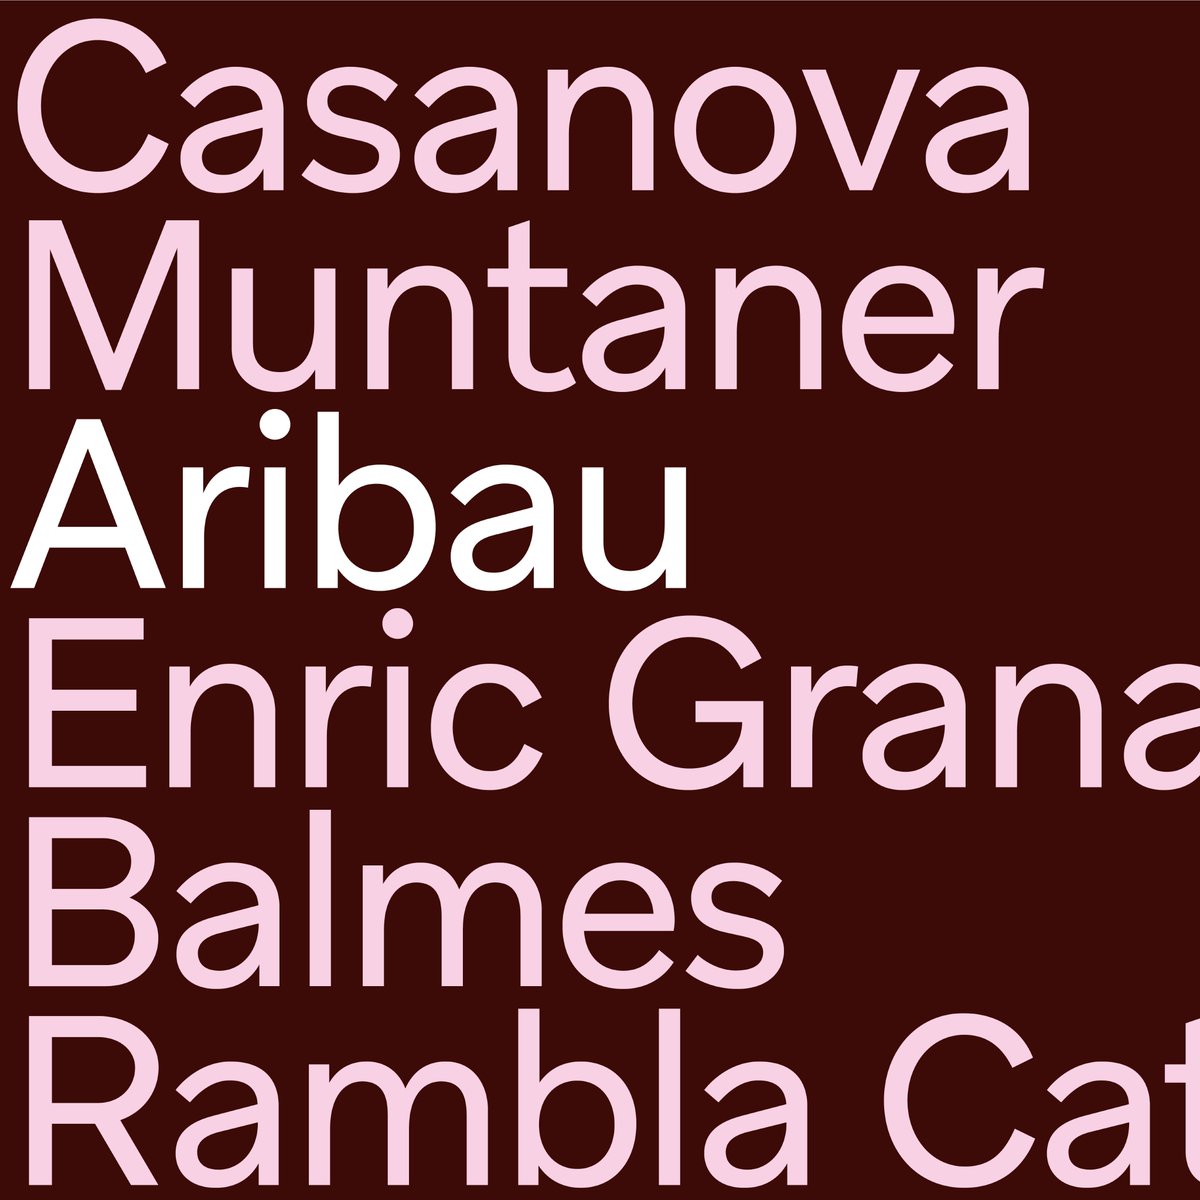 Aribau Grotesk typeface
emtype.net/fonts/aribau-g…

#font #typeface #typography
#barcelonastreets #Casanova #Muntaner #Aribau
#EnricGranados #Balmes #Ramblacatalunya